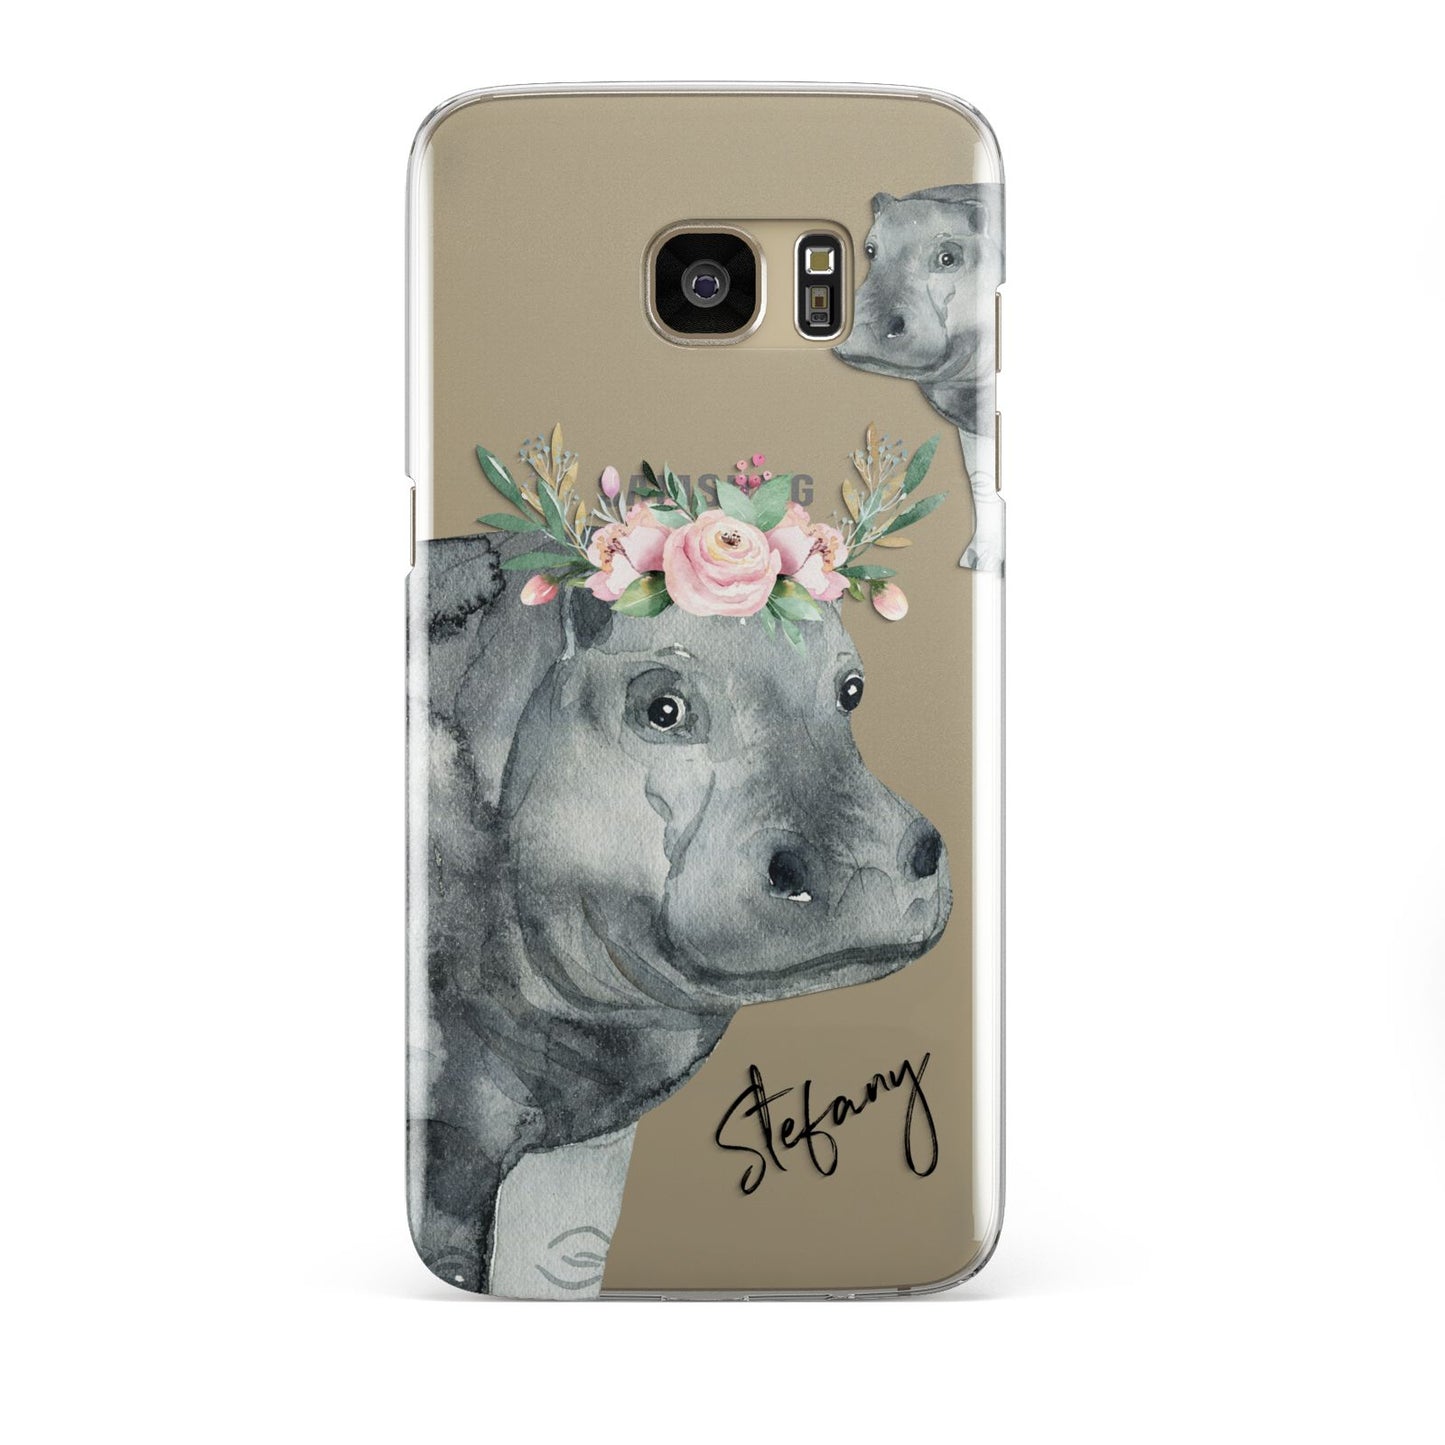 Personalised Hippopotamus Samsung Galaxy S7 Edge Case